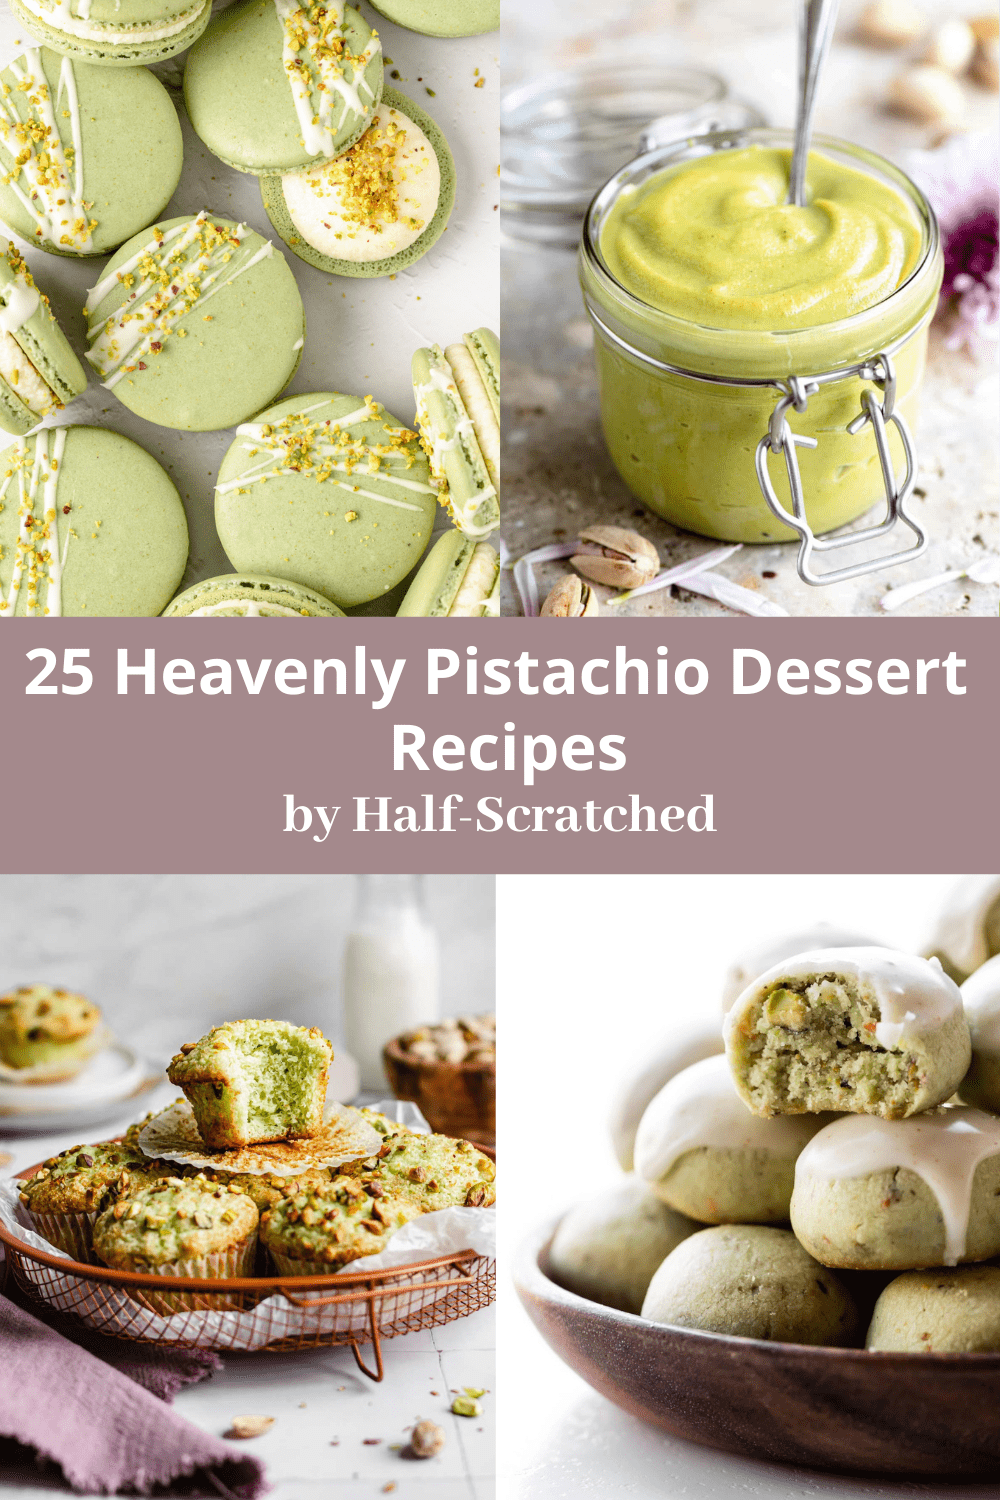 25 Heavenly Pistachio Dessert Recipes